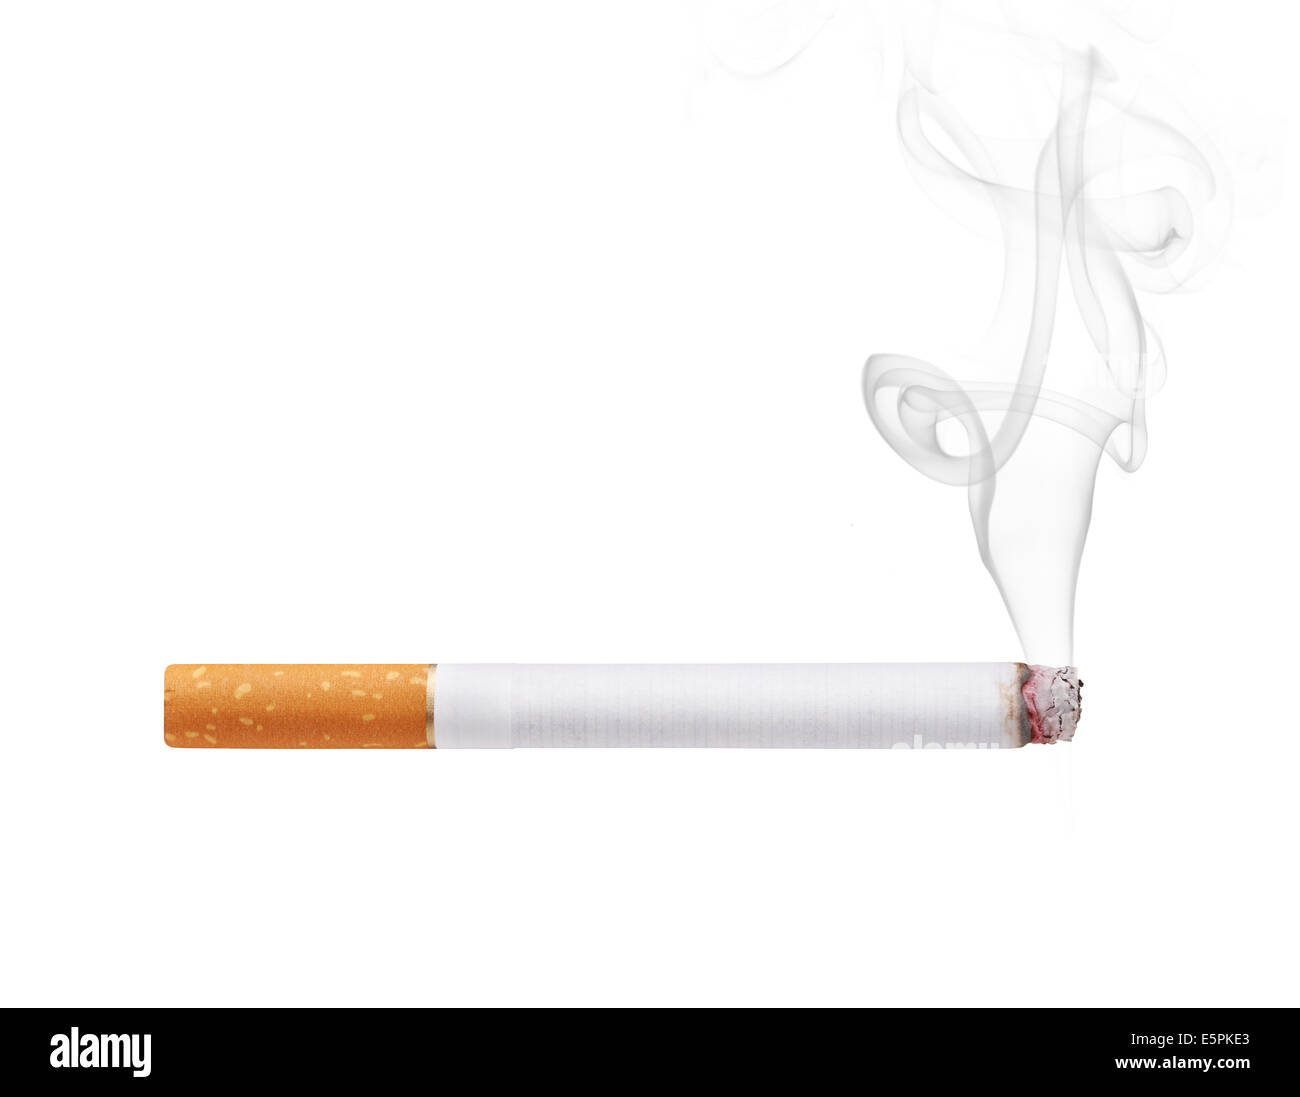 Smoking cigarette isolated on white background Stock Photo - Alamy